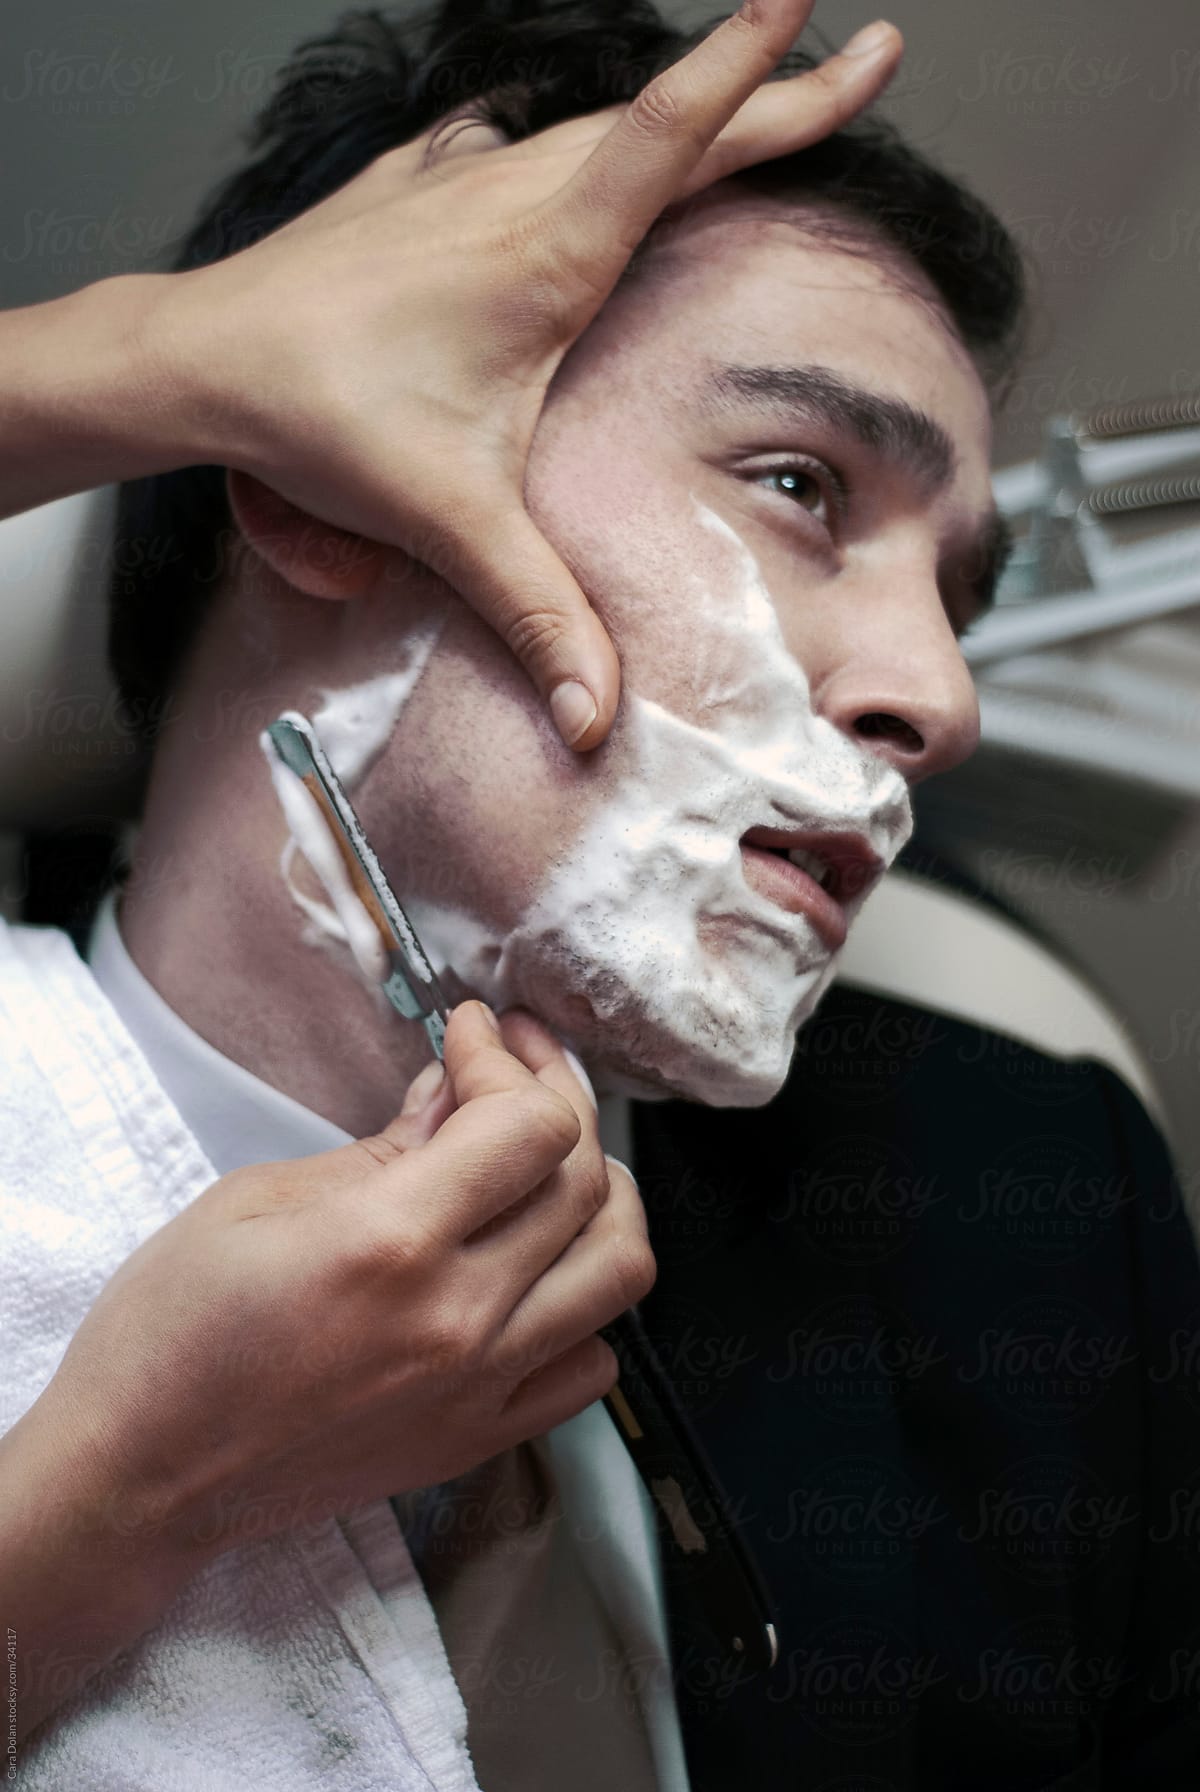 Man receives straight razor shave